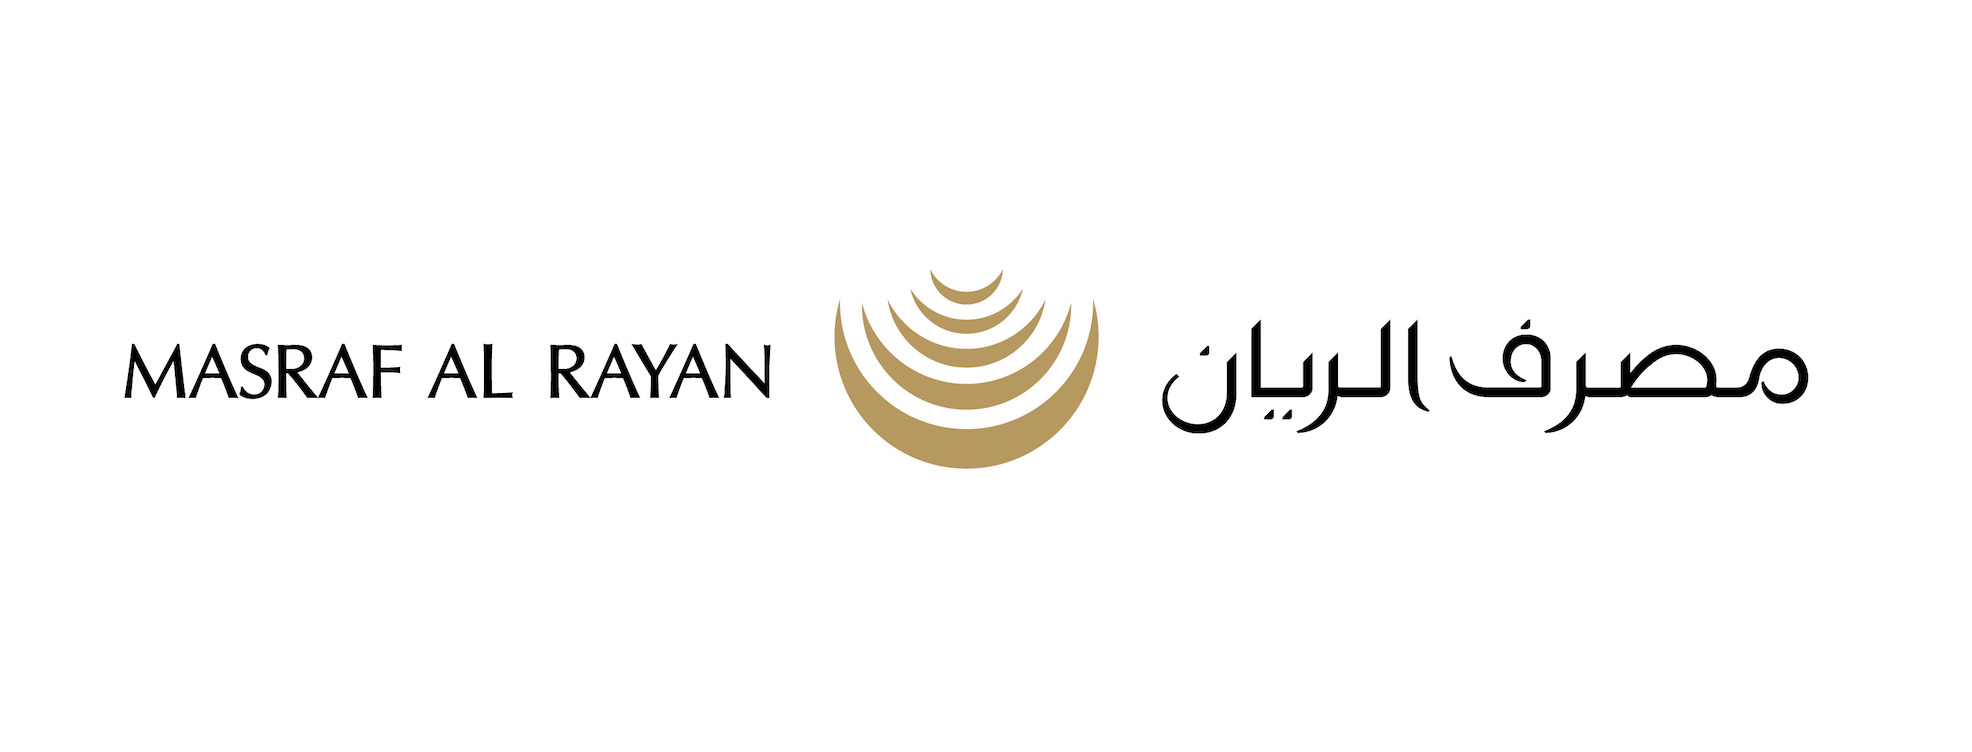 18-extraordinary-facts-about-masraf-al-rayan